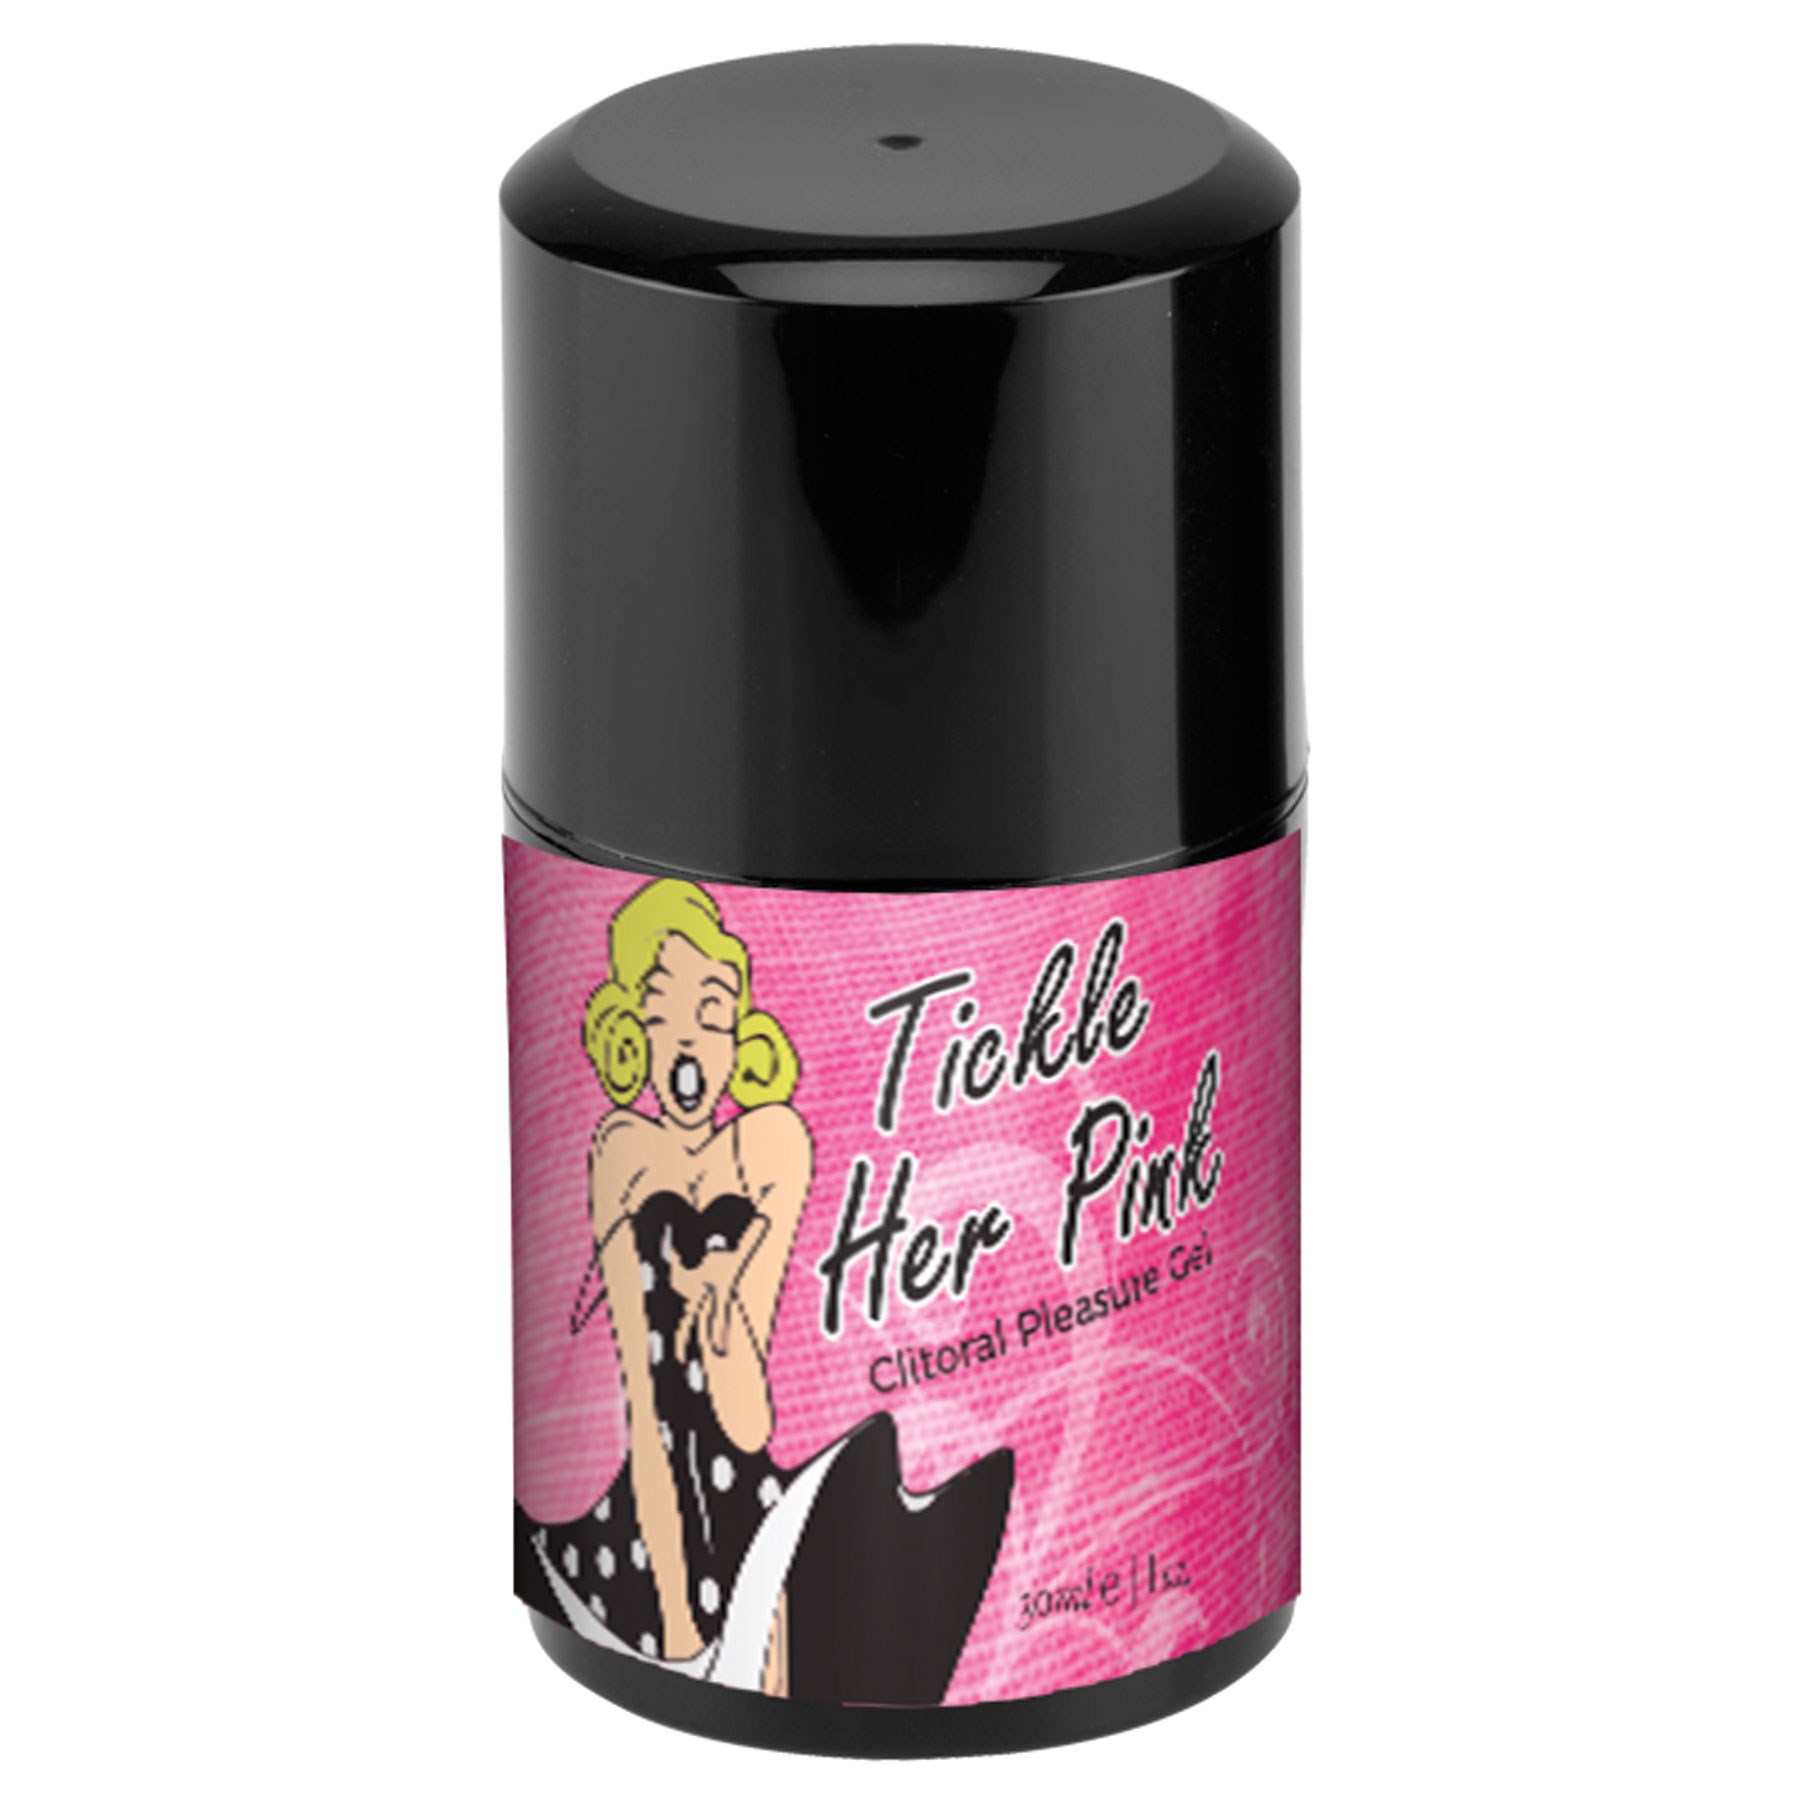 Tickle Her Pink Clitoral Pleasure Gel Bottle